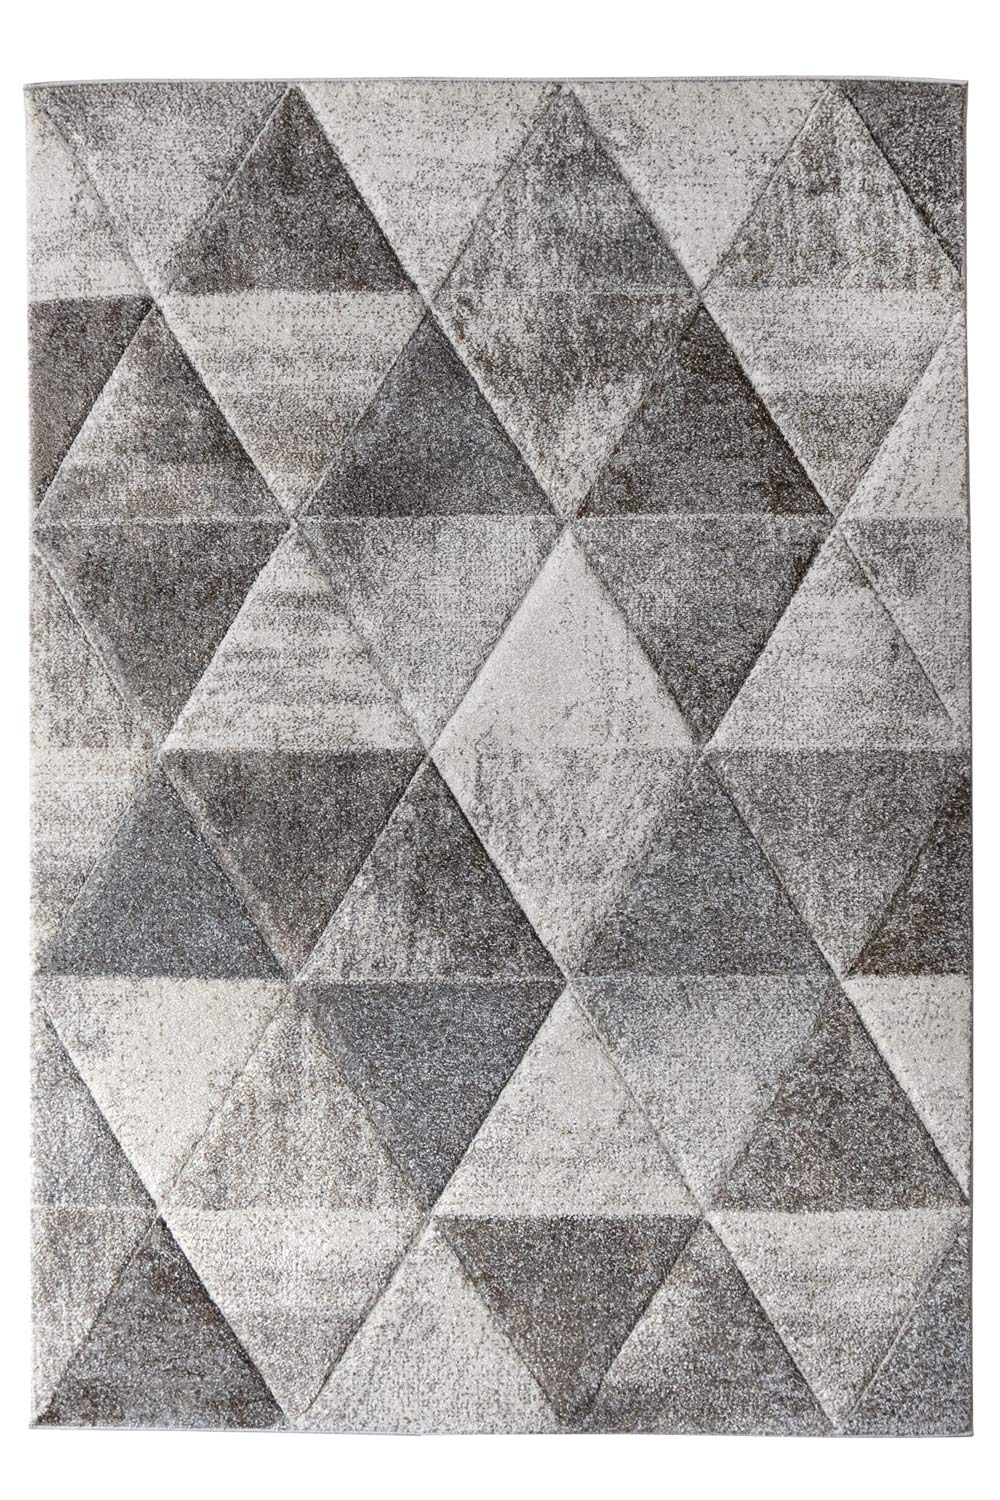 Kusový koberec Jasper 40012 895 80x150 cm